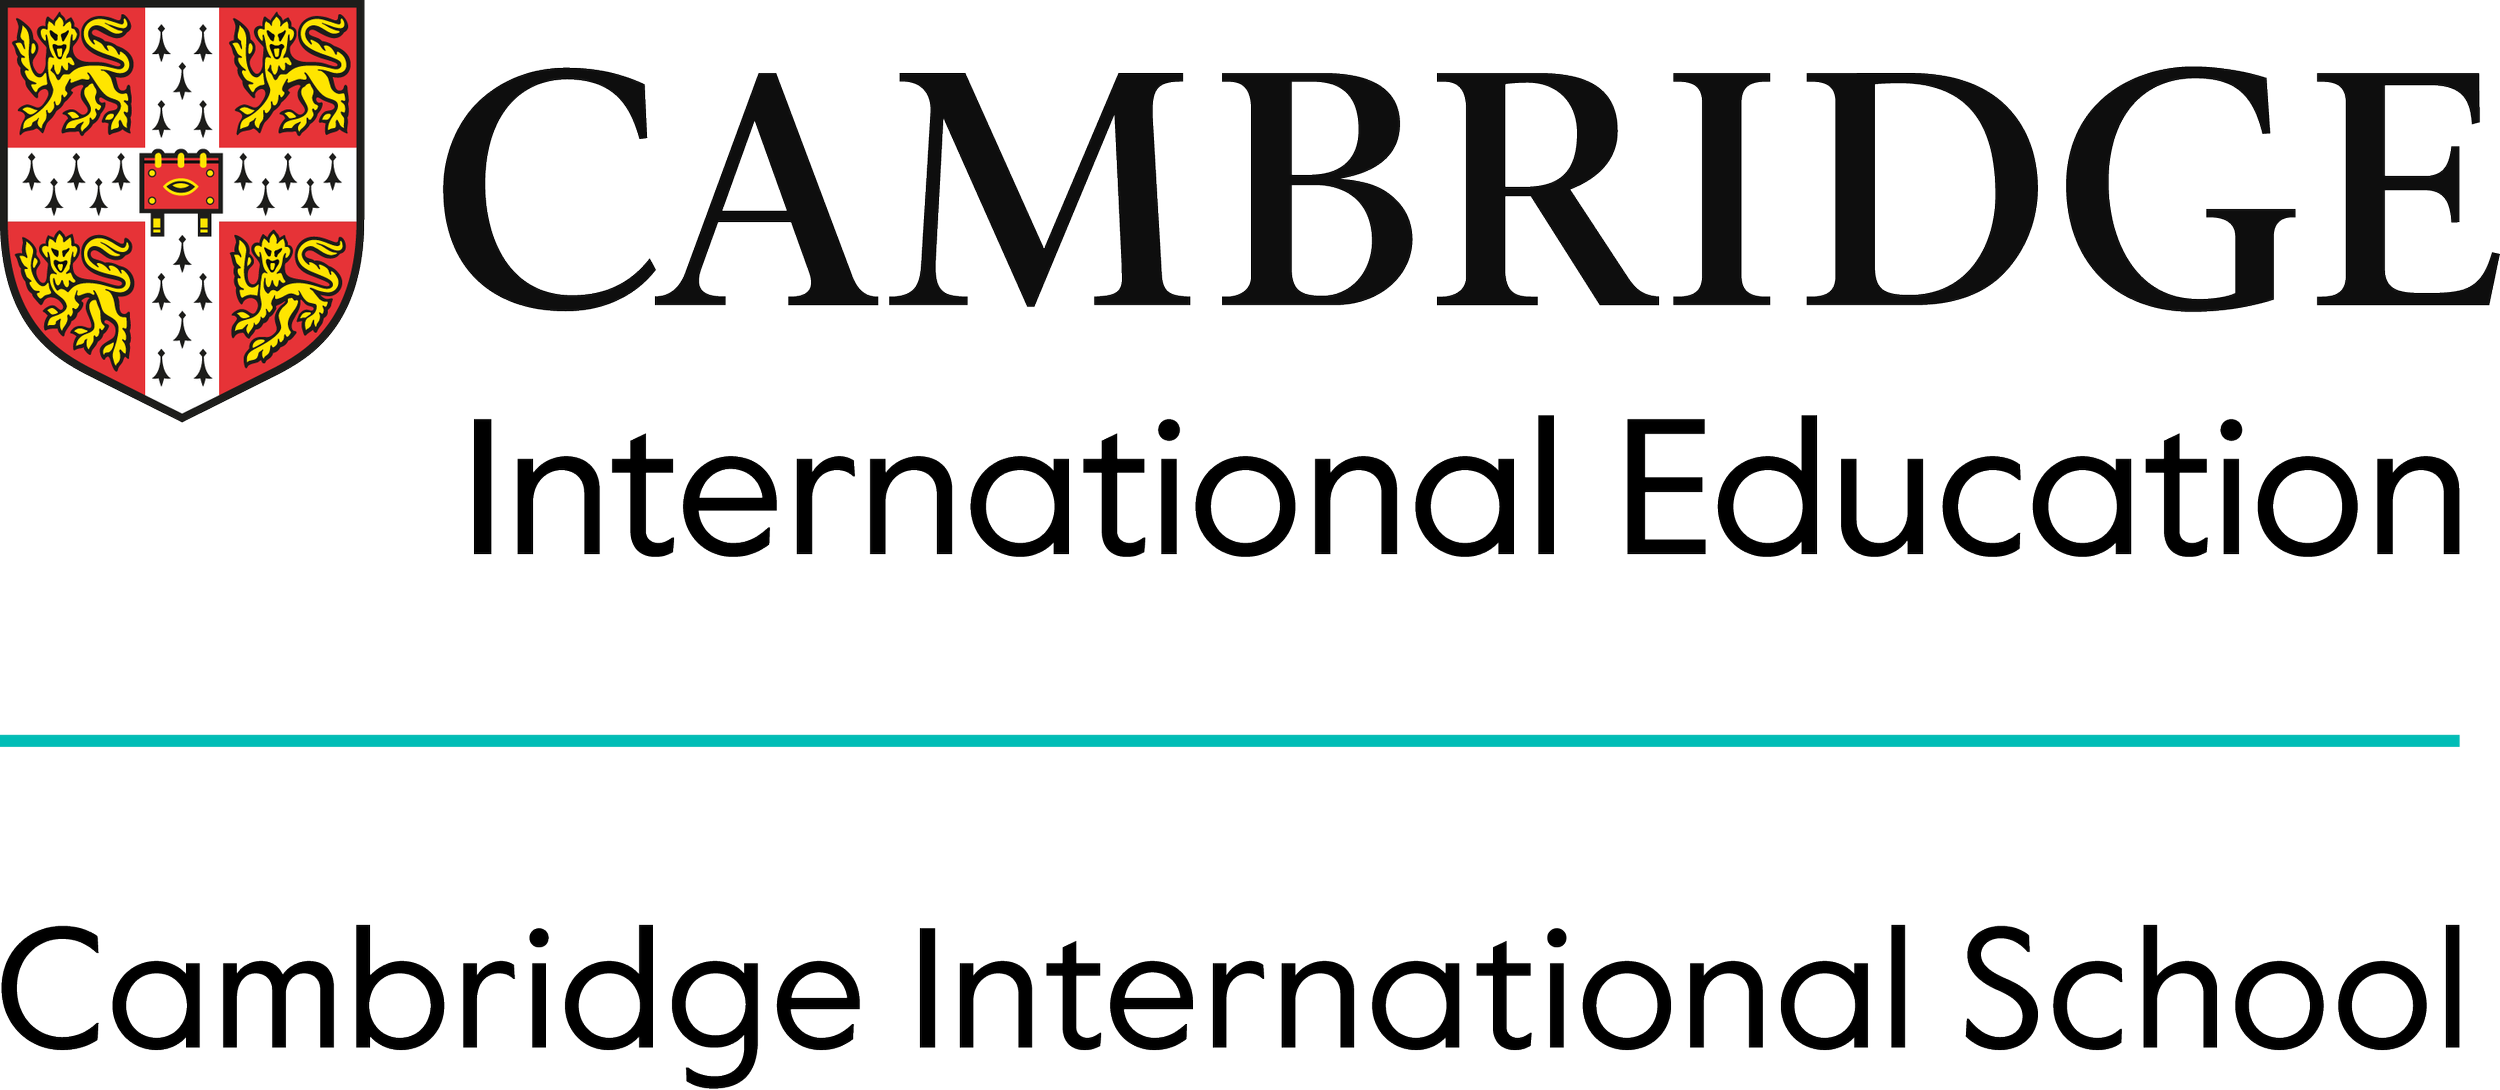 Cambridge International Education logo new.png